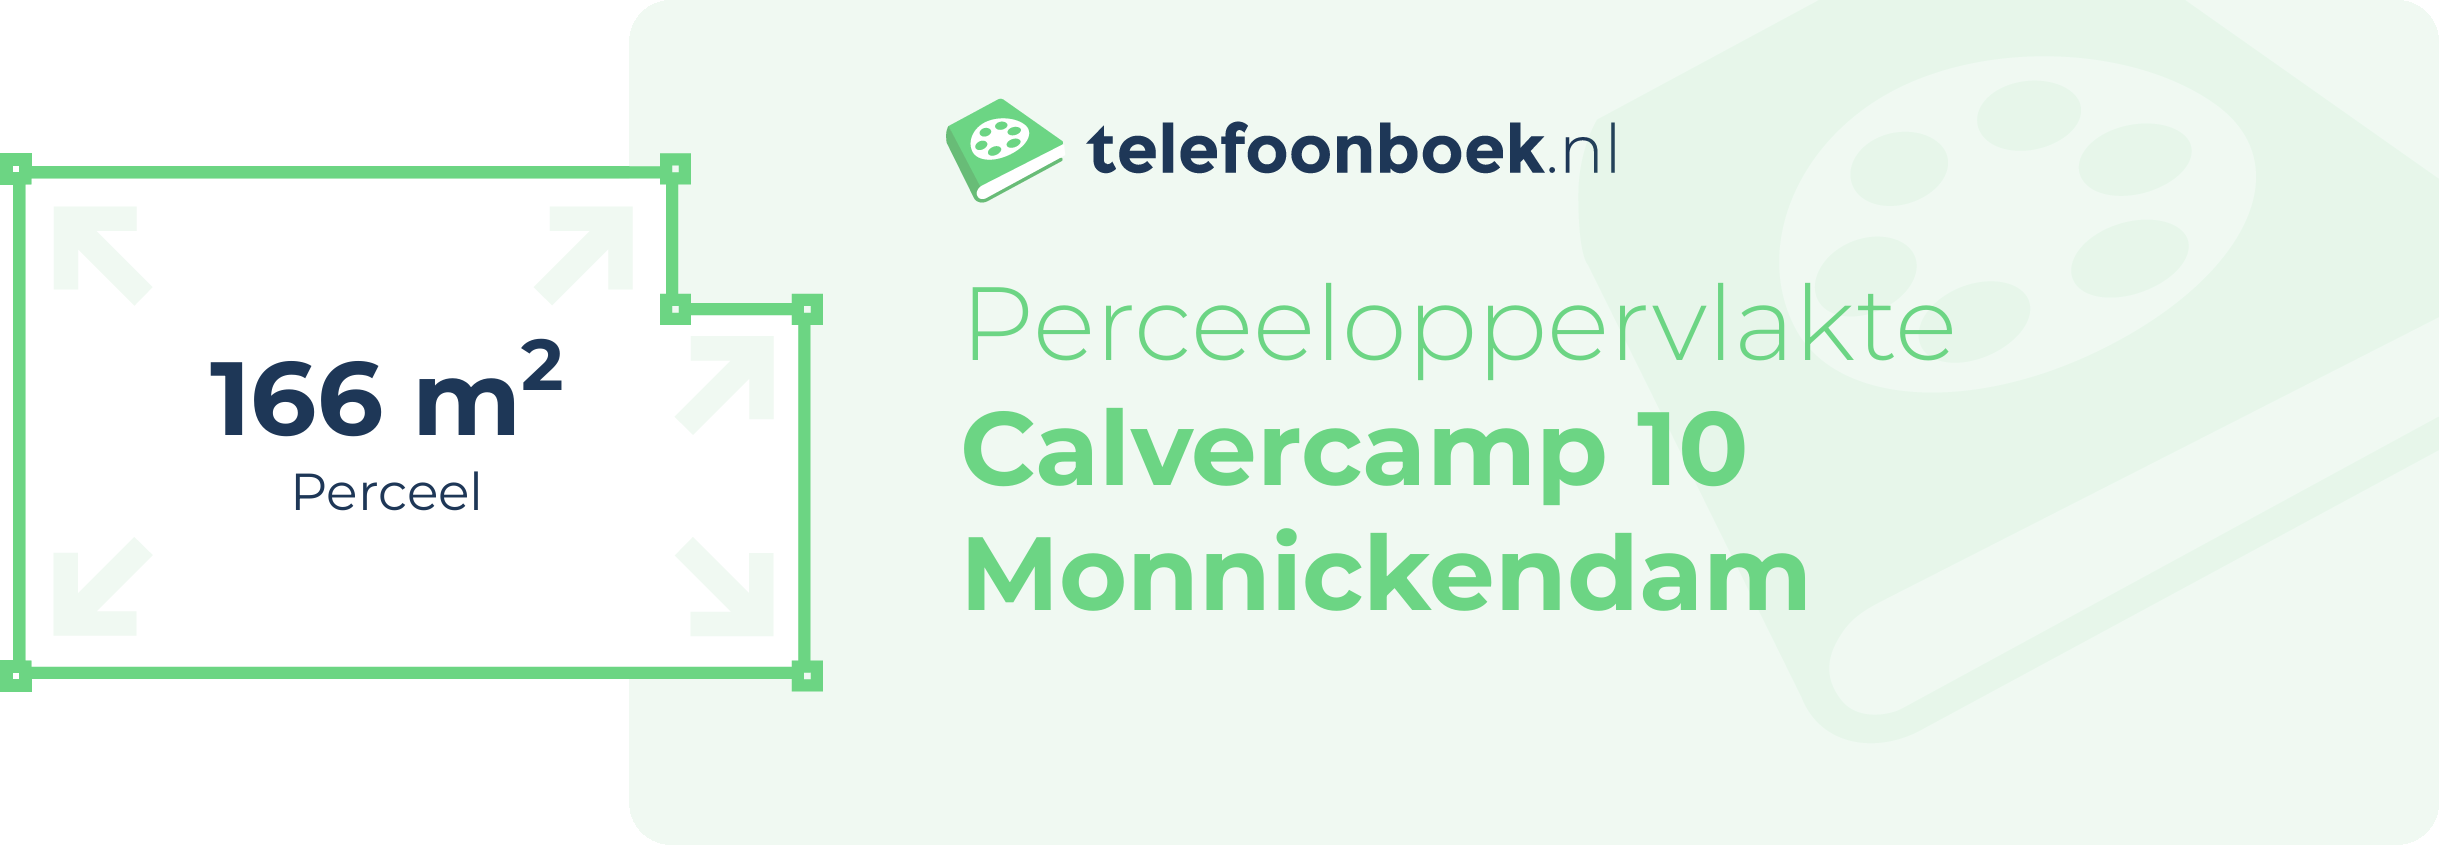 Perceeloppervlakte Calvercamp 10 Monnickendam